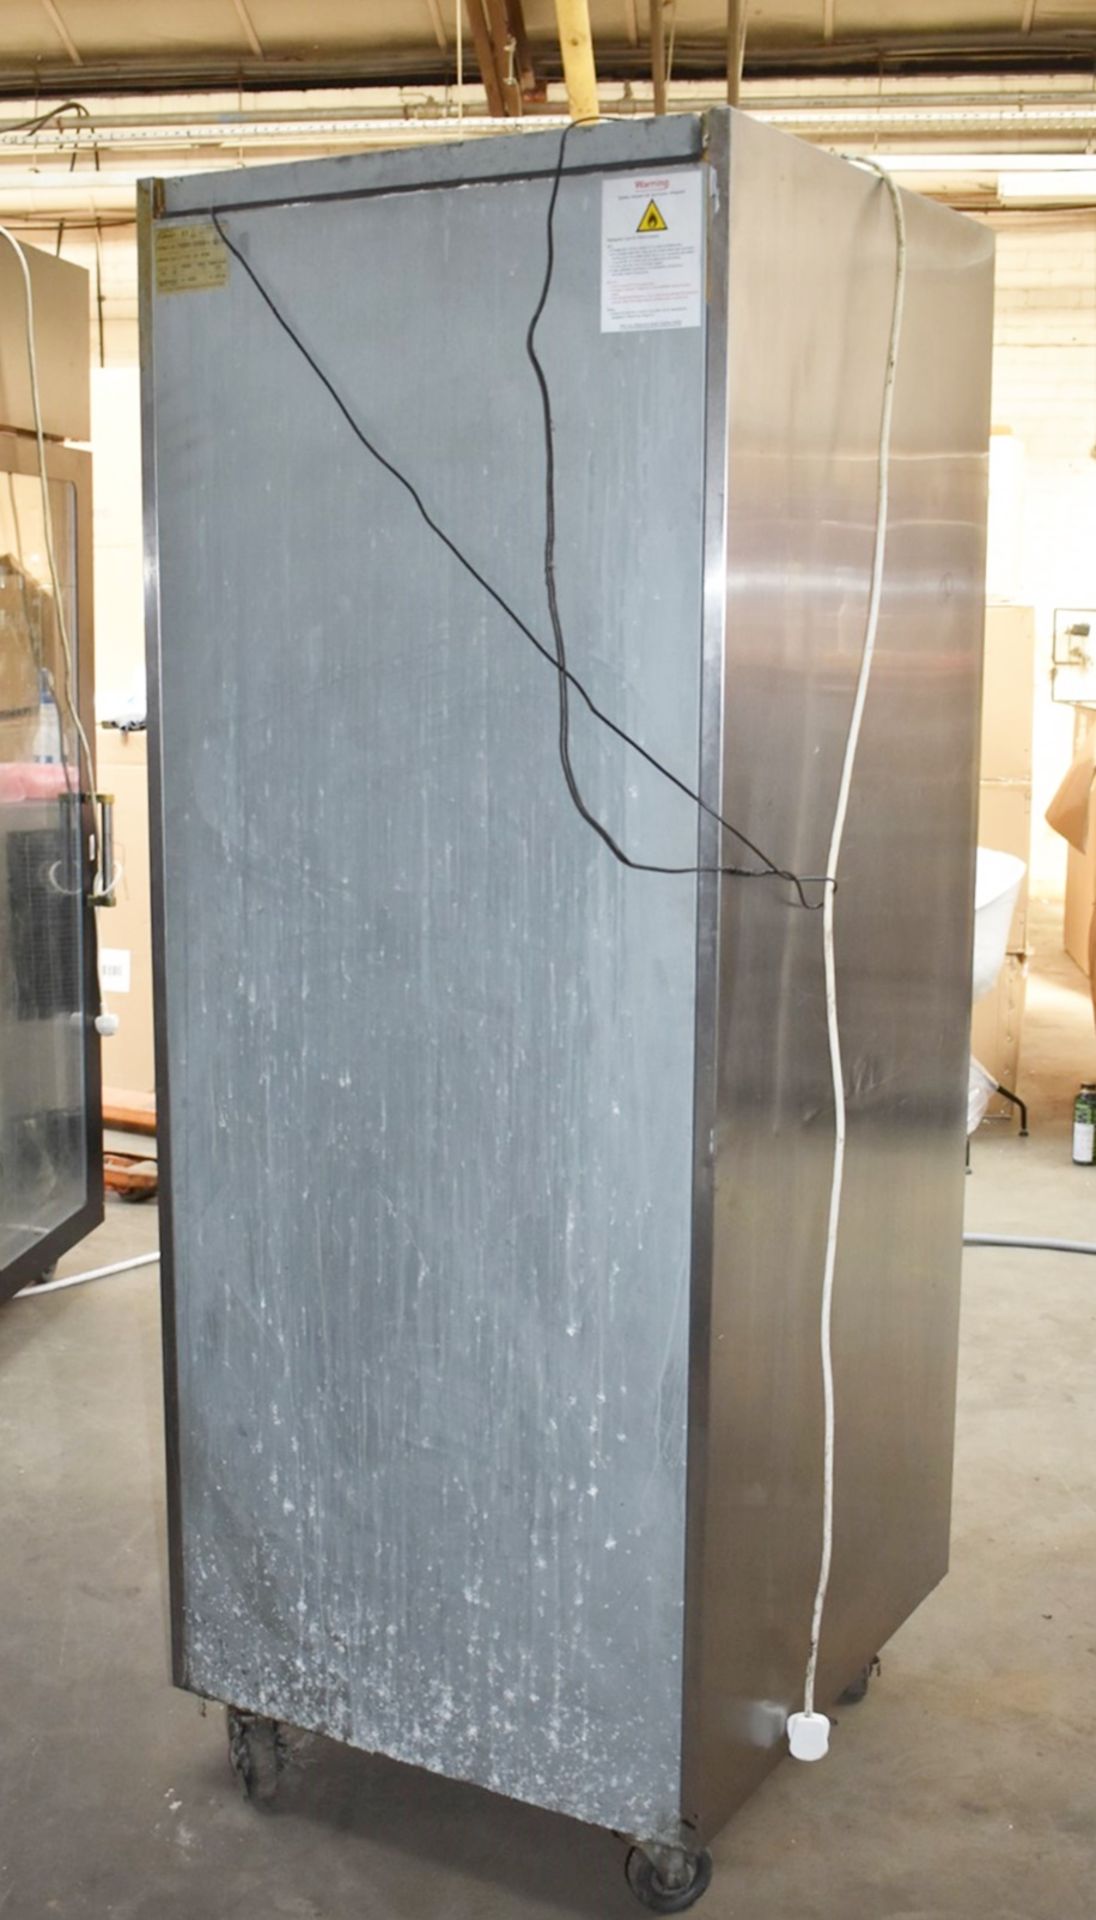 1 x Williams Jade Upright Single Door Refrigerator Stainless Steel Exterior & Internal Bakery Trays - Image 7 of 8